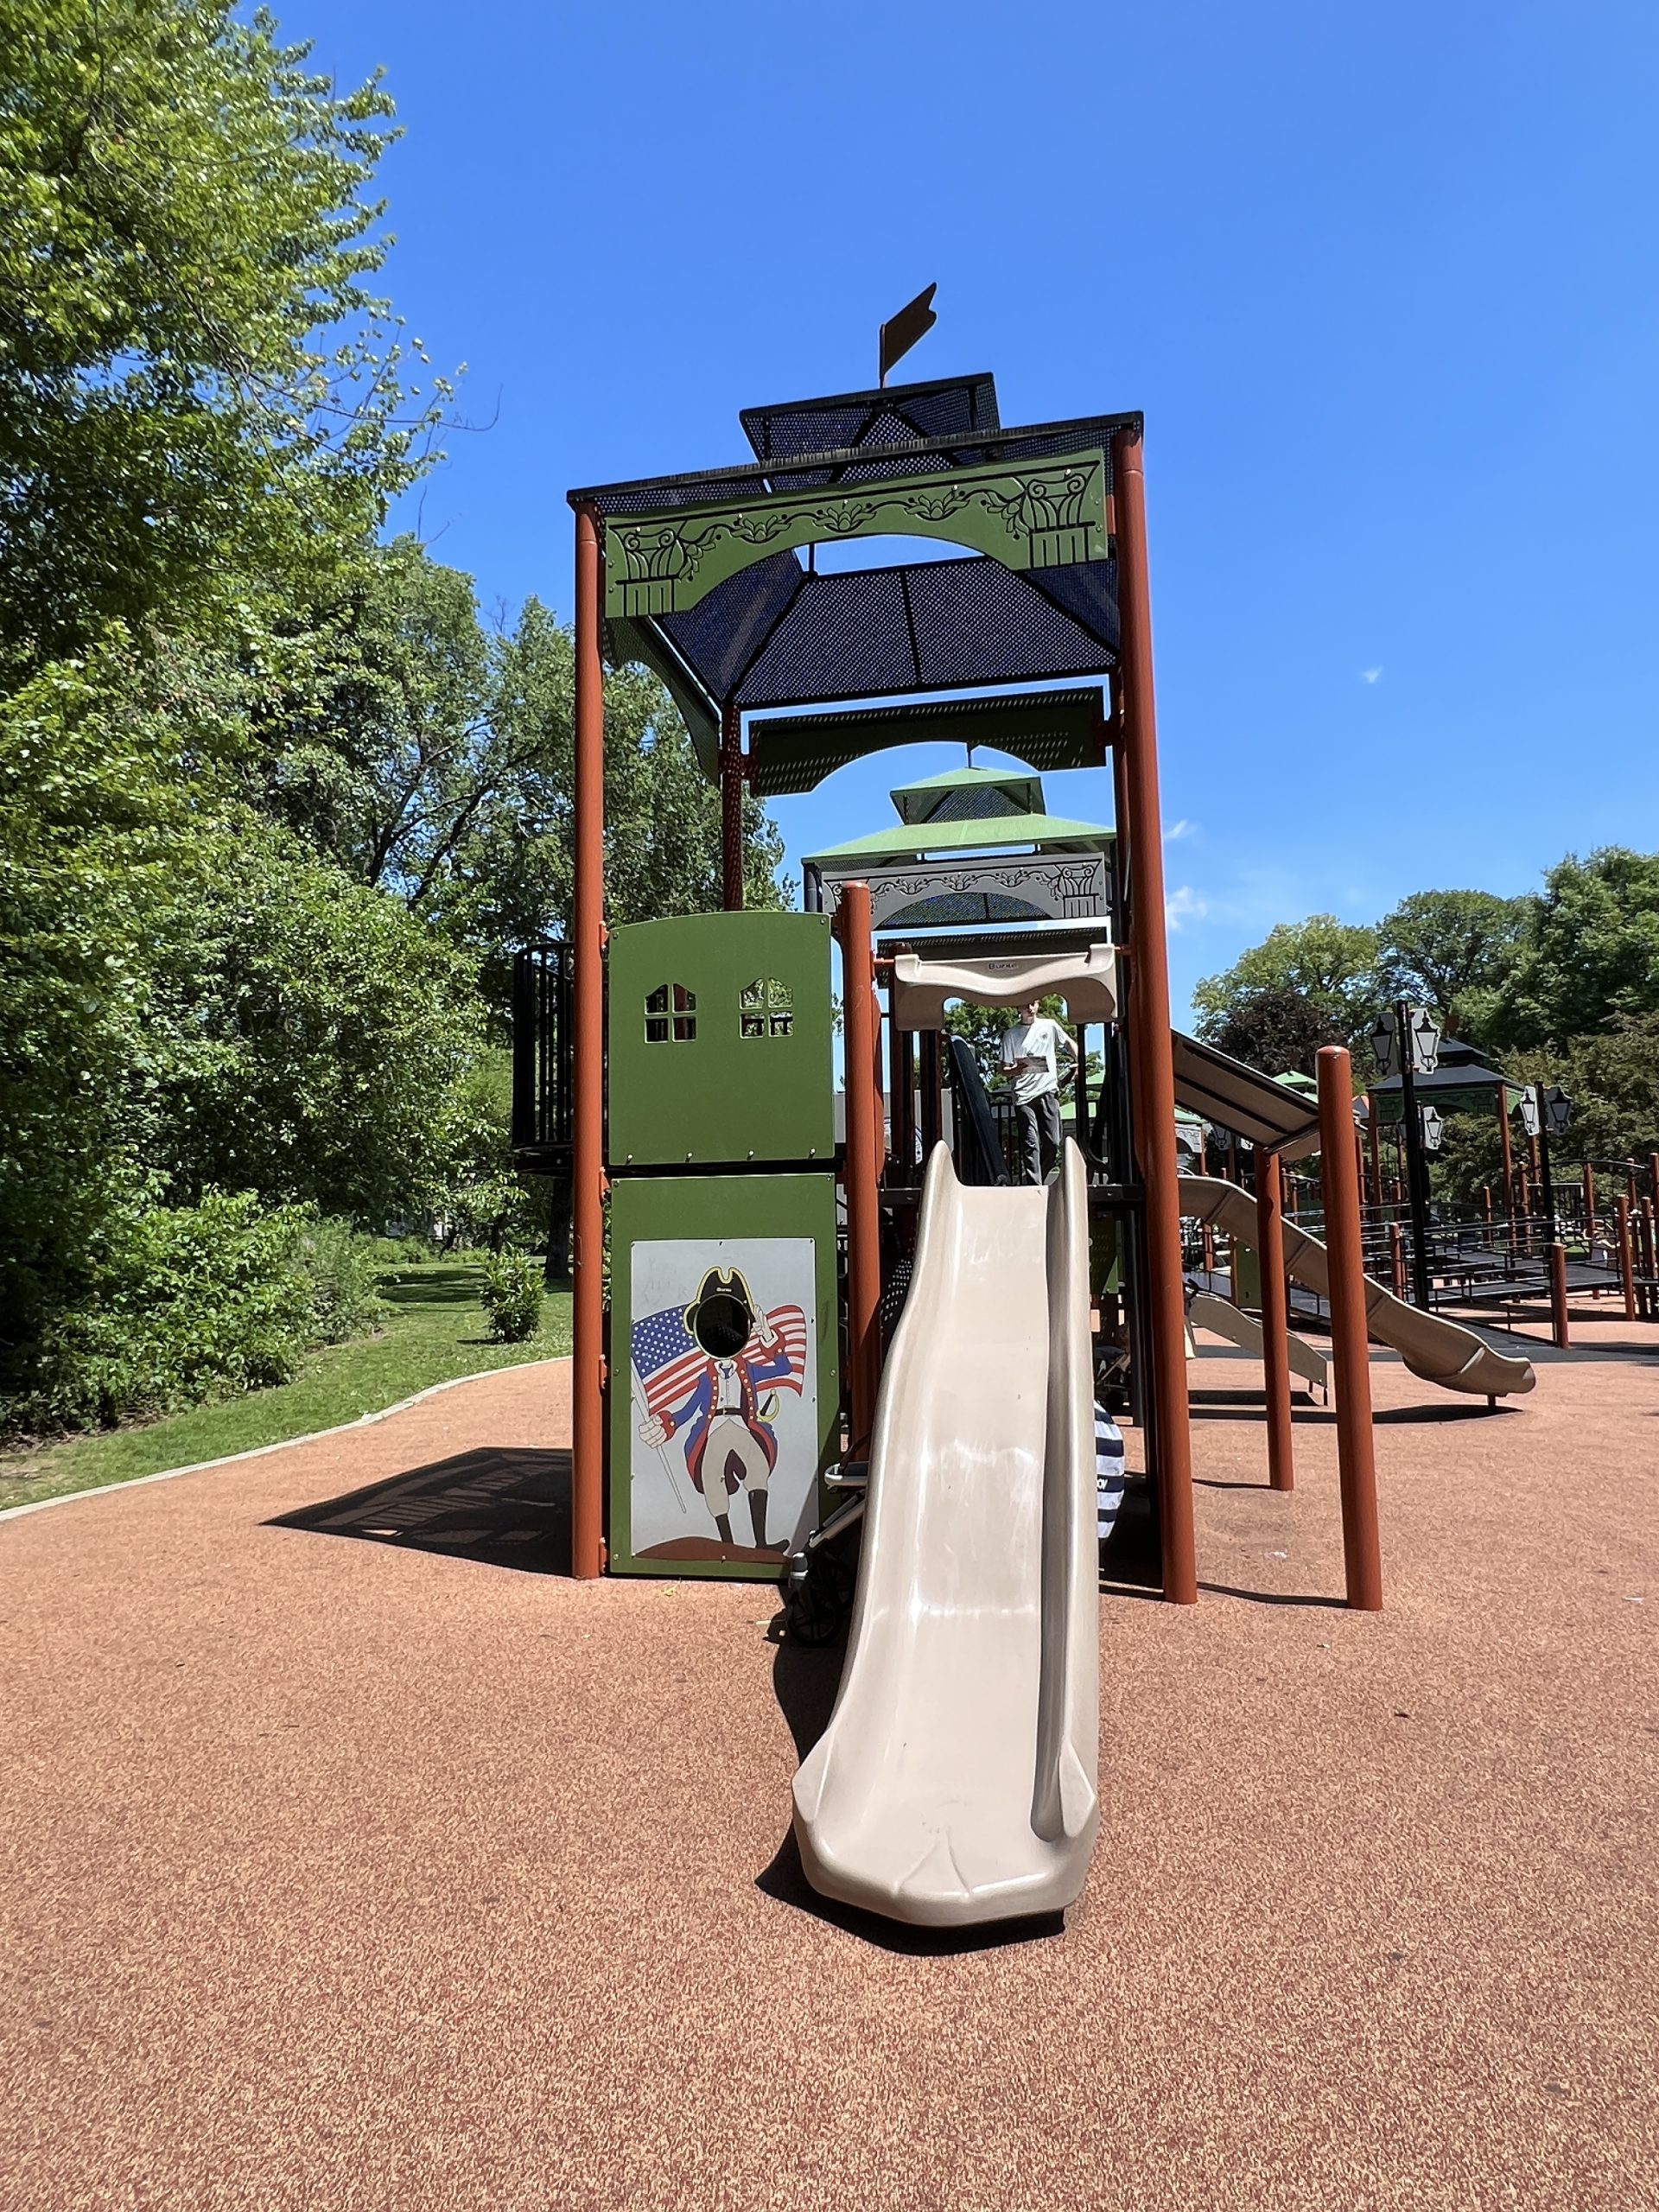 SLIDE tall straight slide at Mindowaskin Park Playground in Westfield NJ